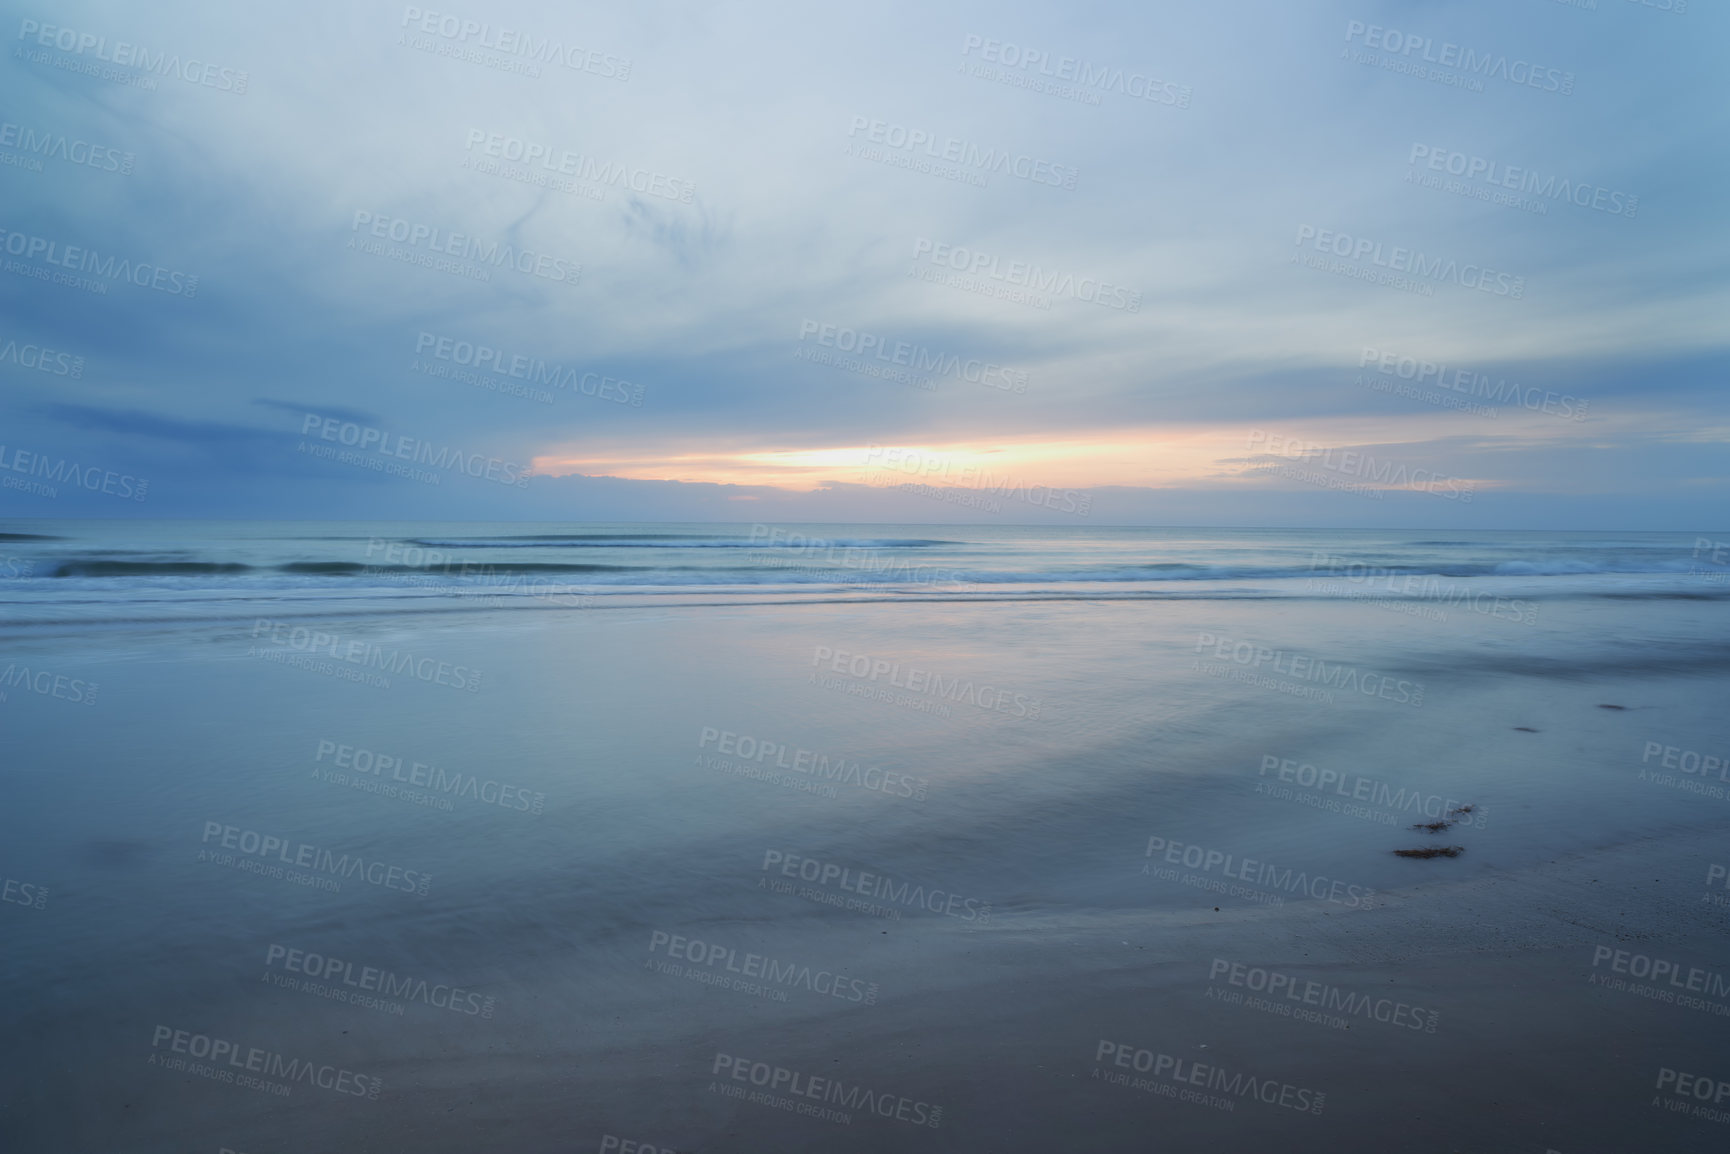 Buy stock photo A sunset over a desolate cloudy beach